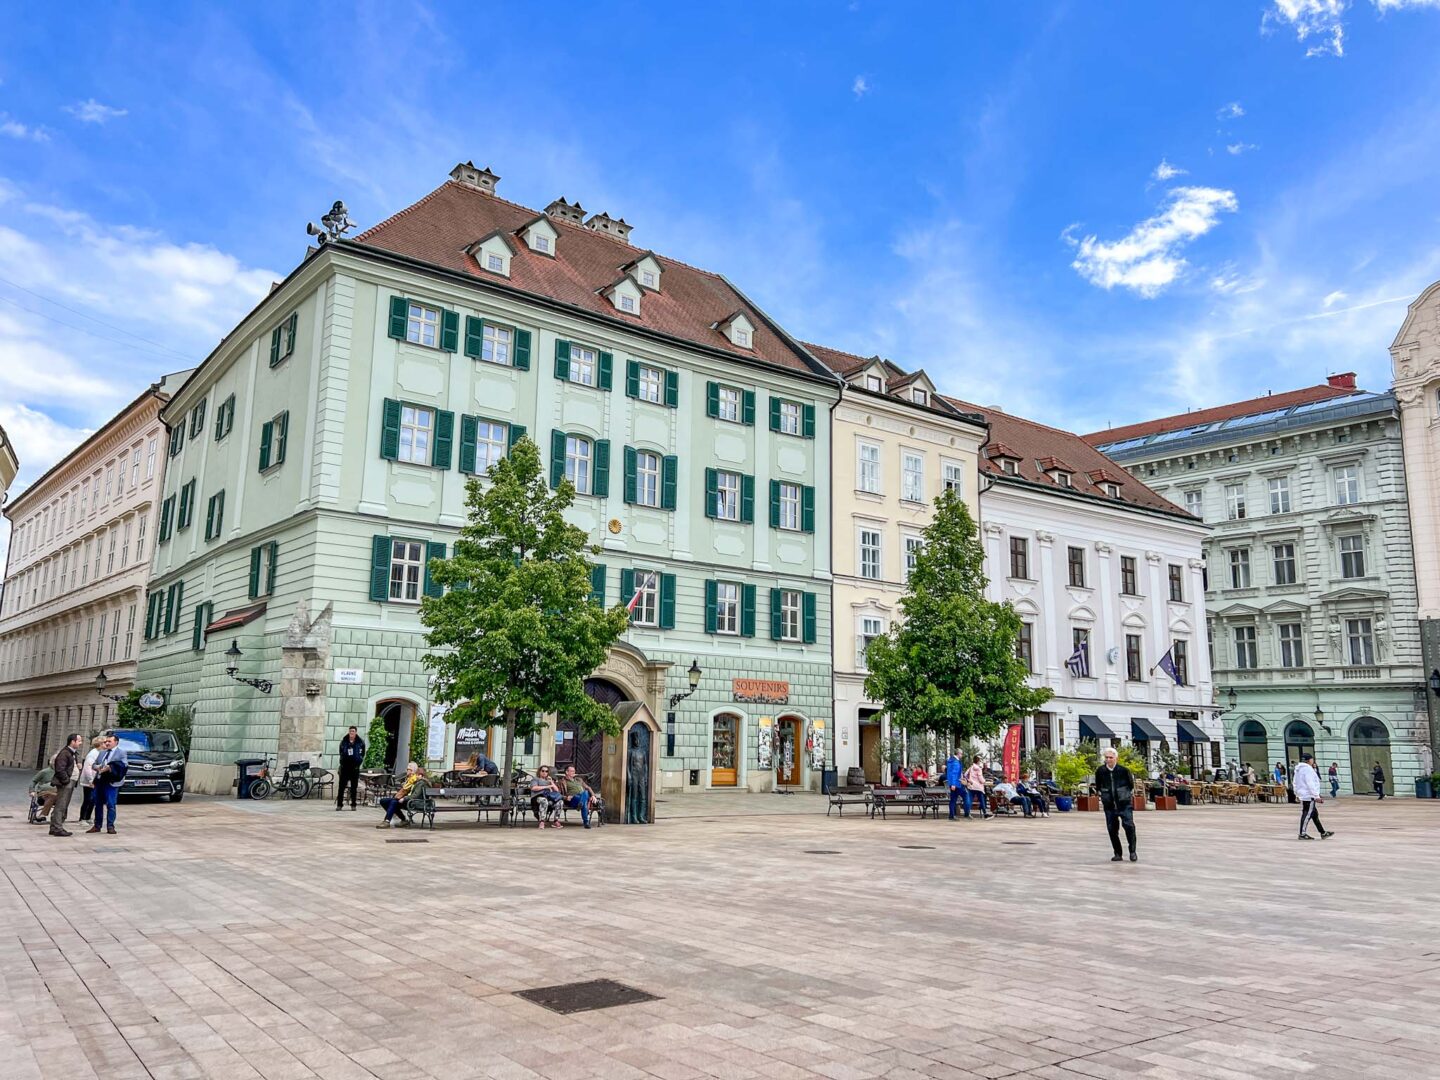 one day in Bratislava, Bratislava square and green building